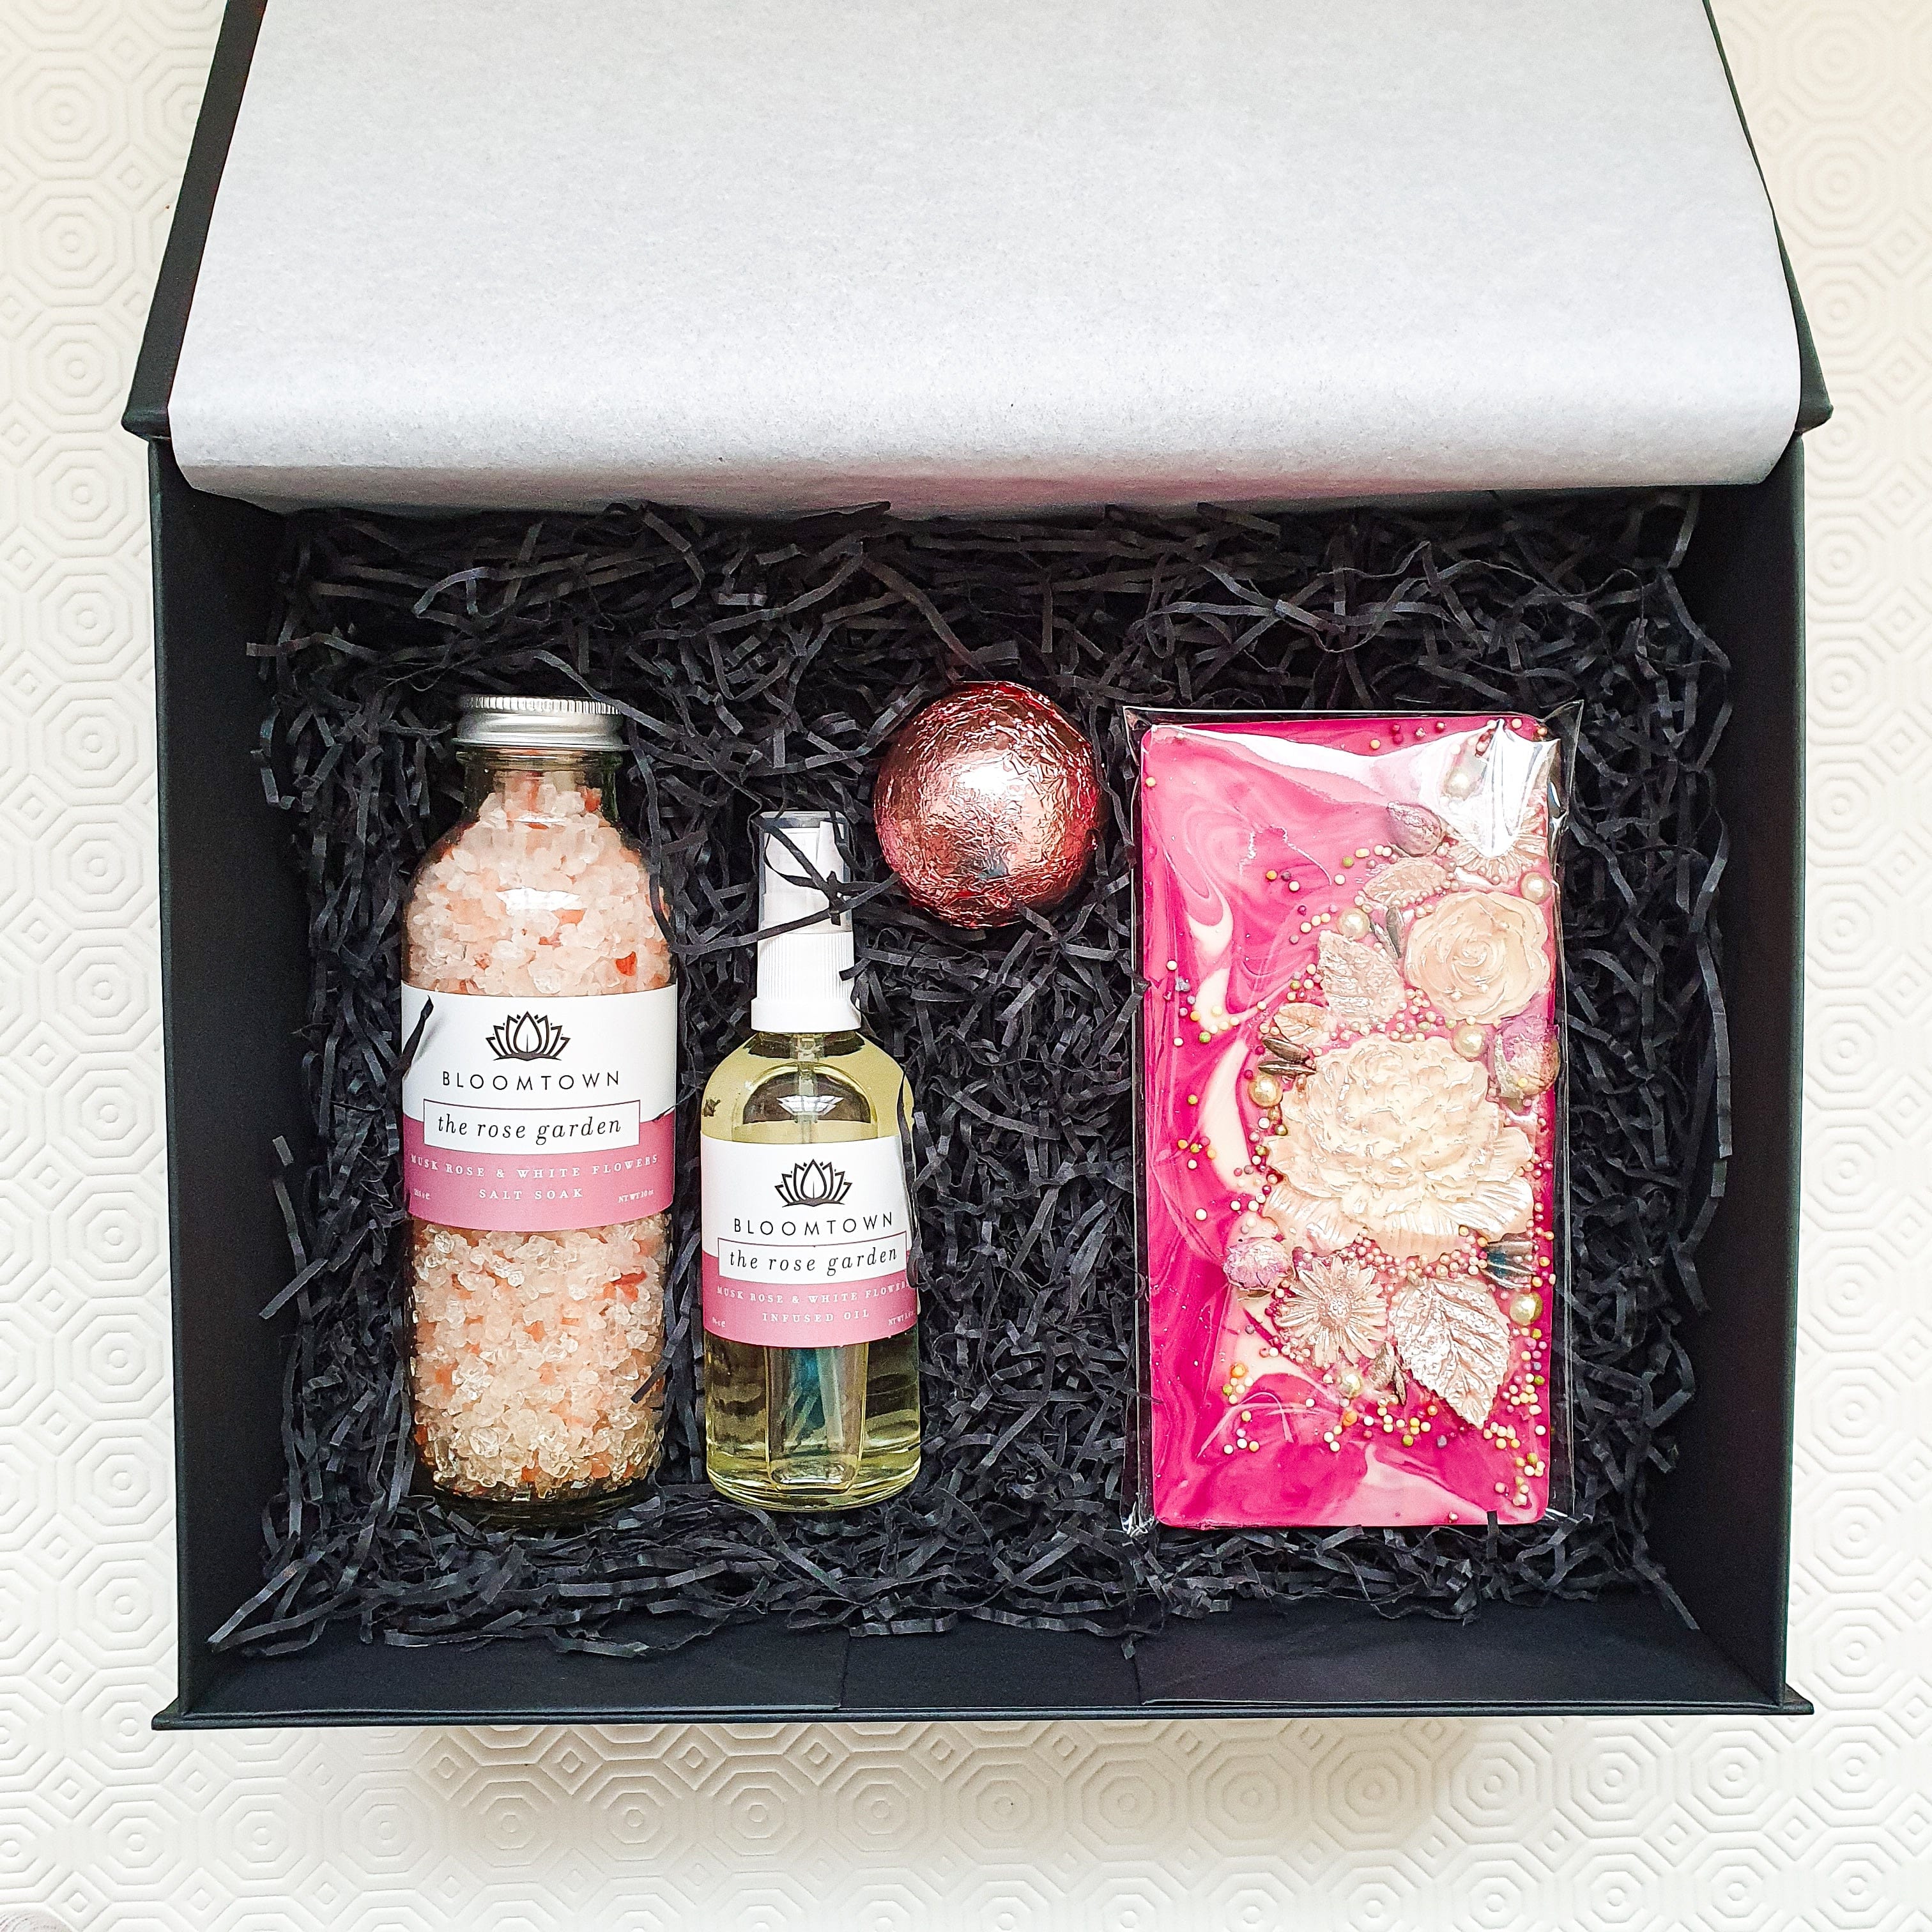 4. Gift box - Sisi food sculptor